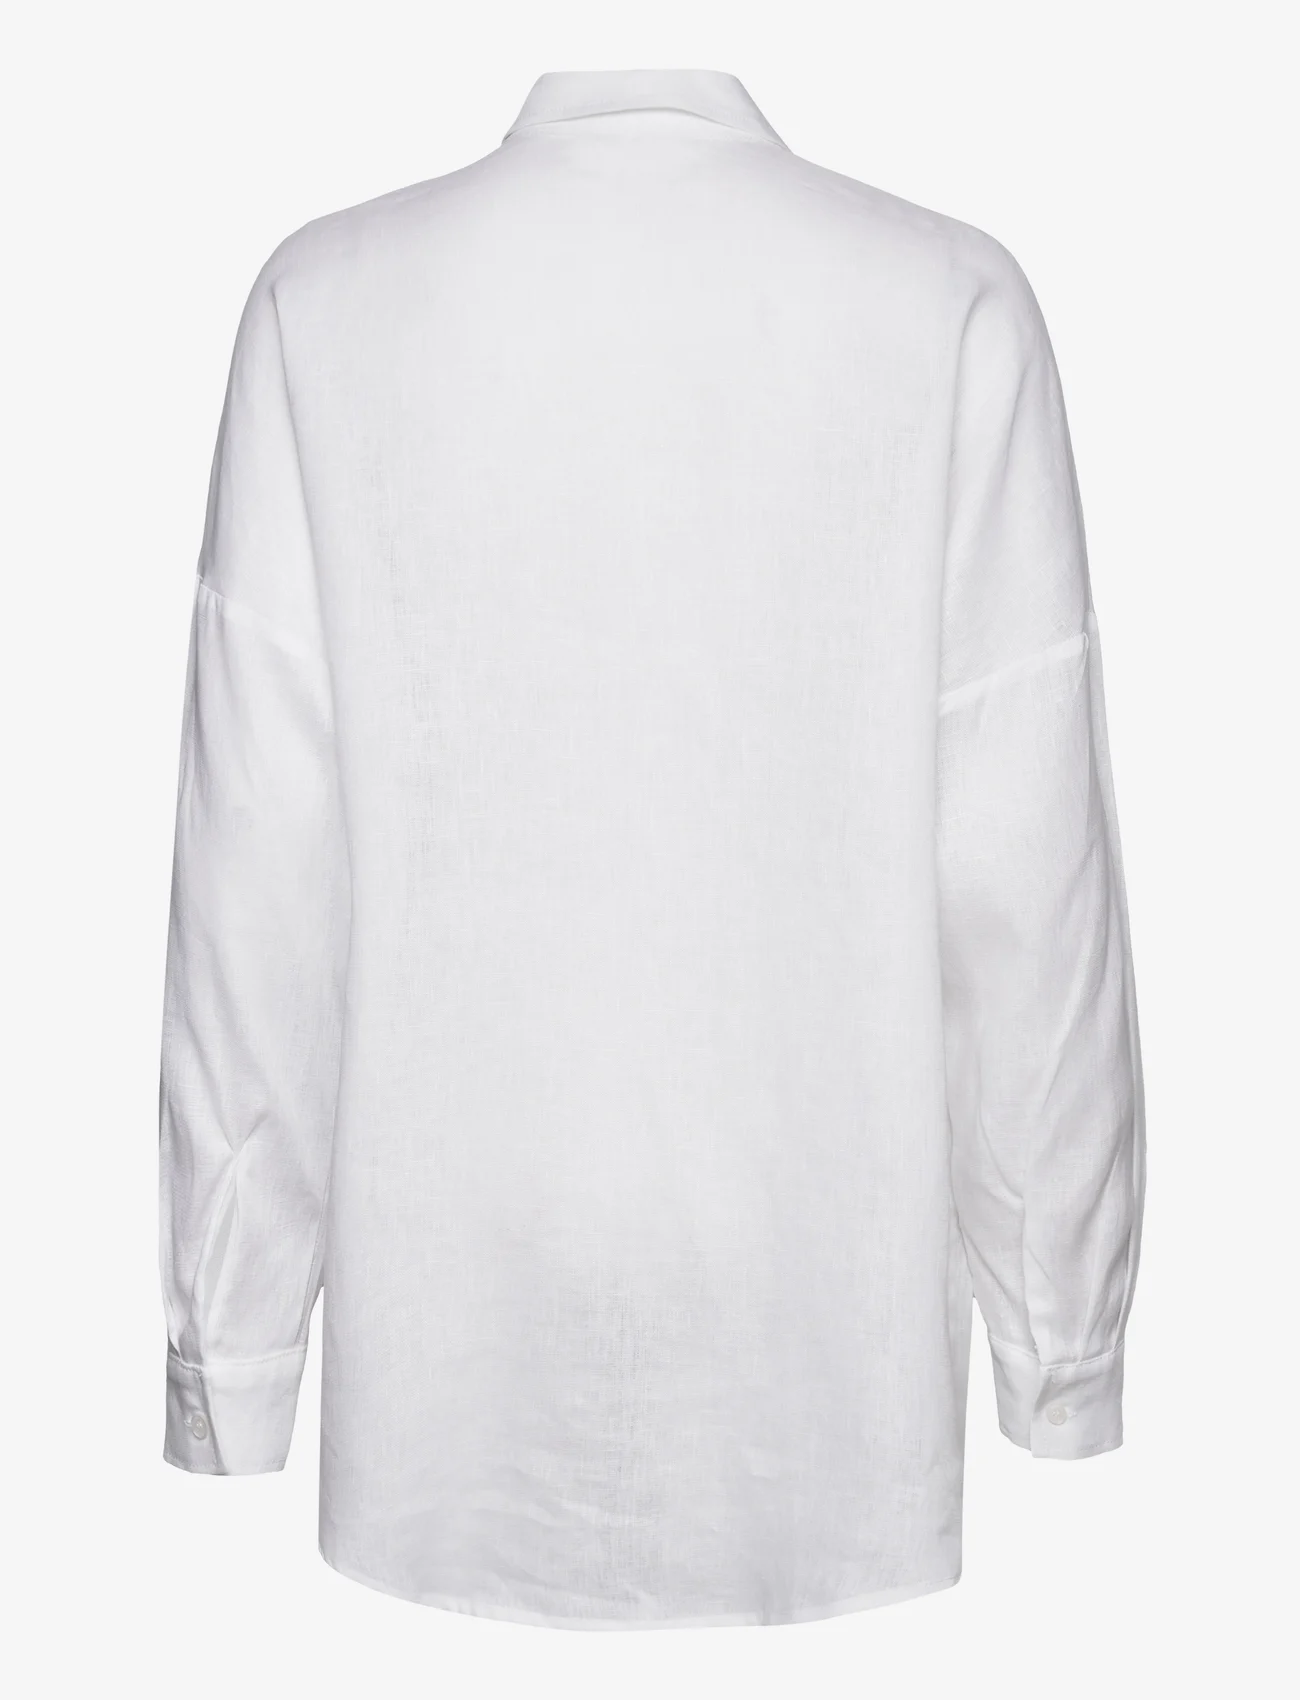 LEBRAND - BILBAO LINEN SHIRT - koszule z długimi rękawami - white - 1